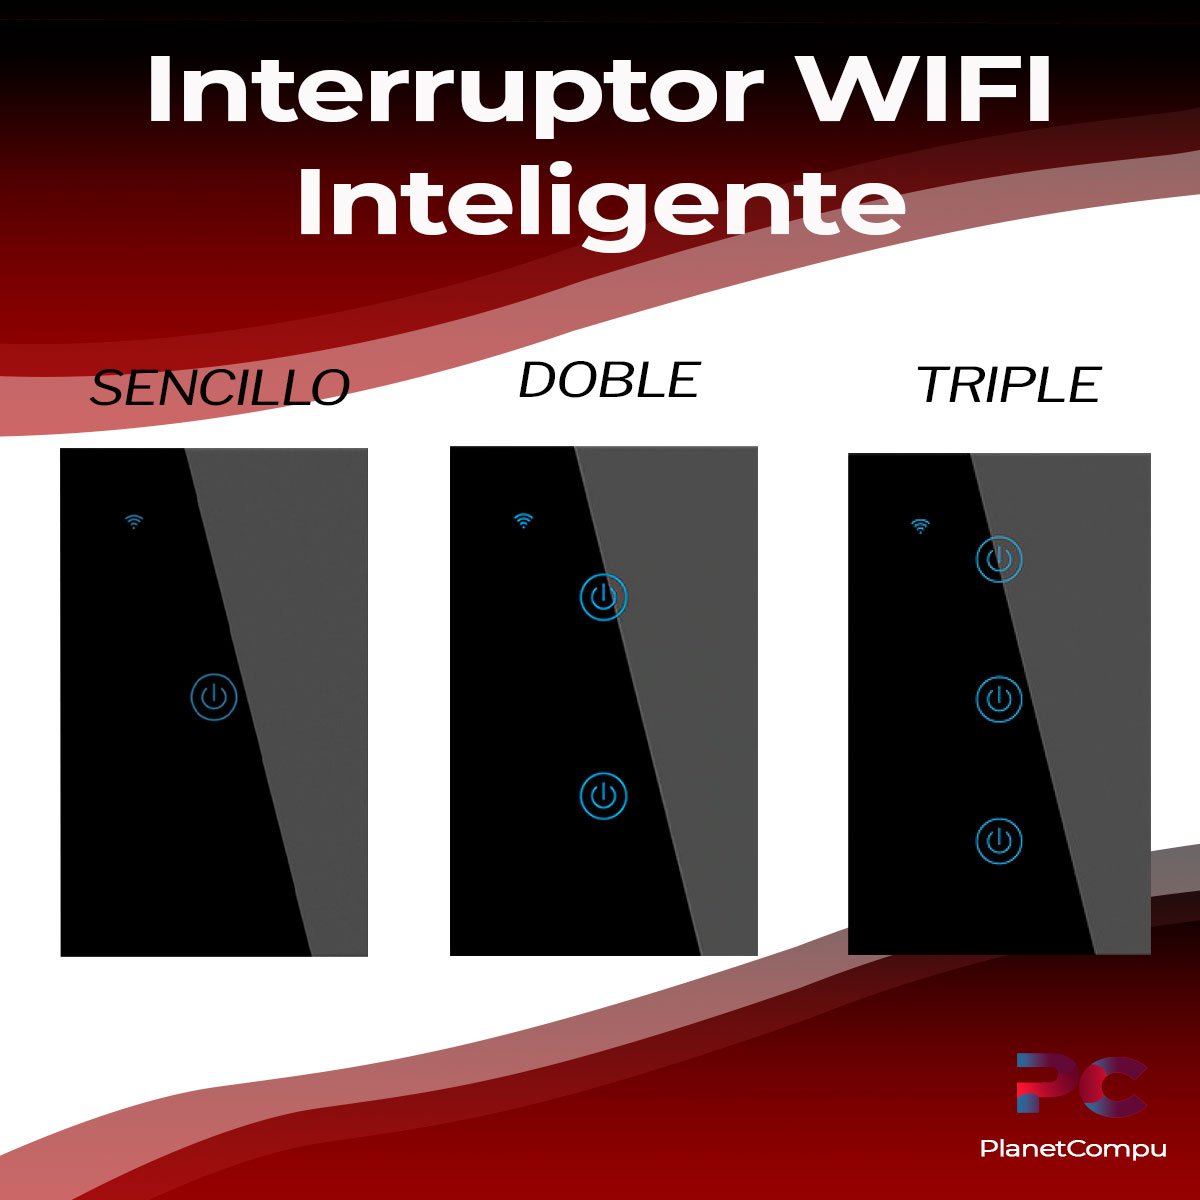 Interruptor embutido doble wifi Tuya Smart Life - InfotecnologiaSur